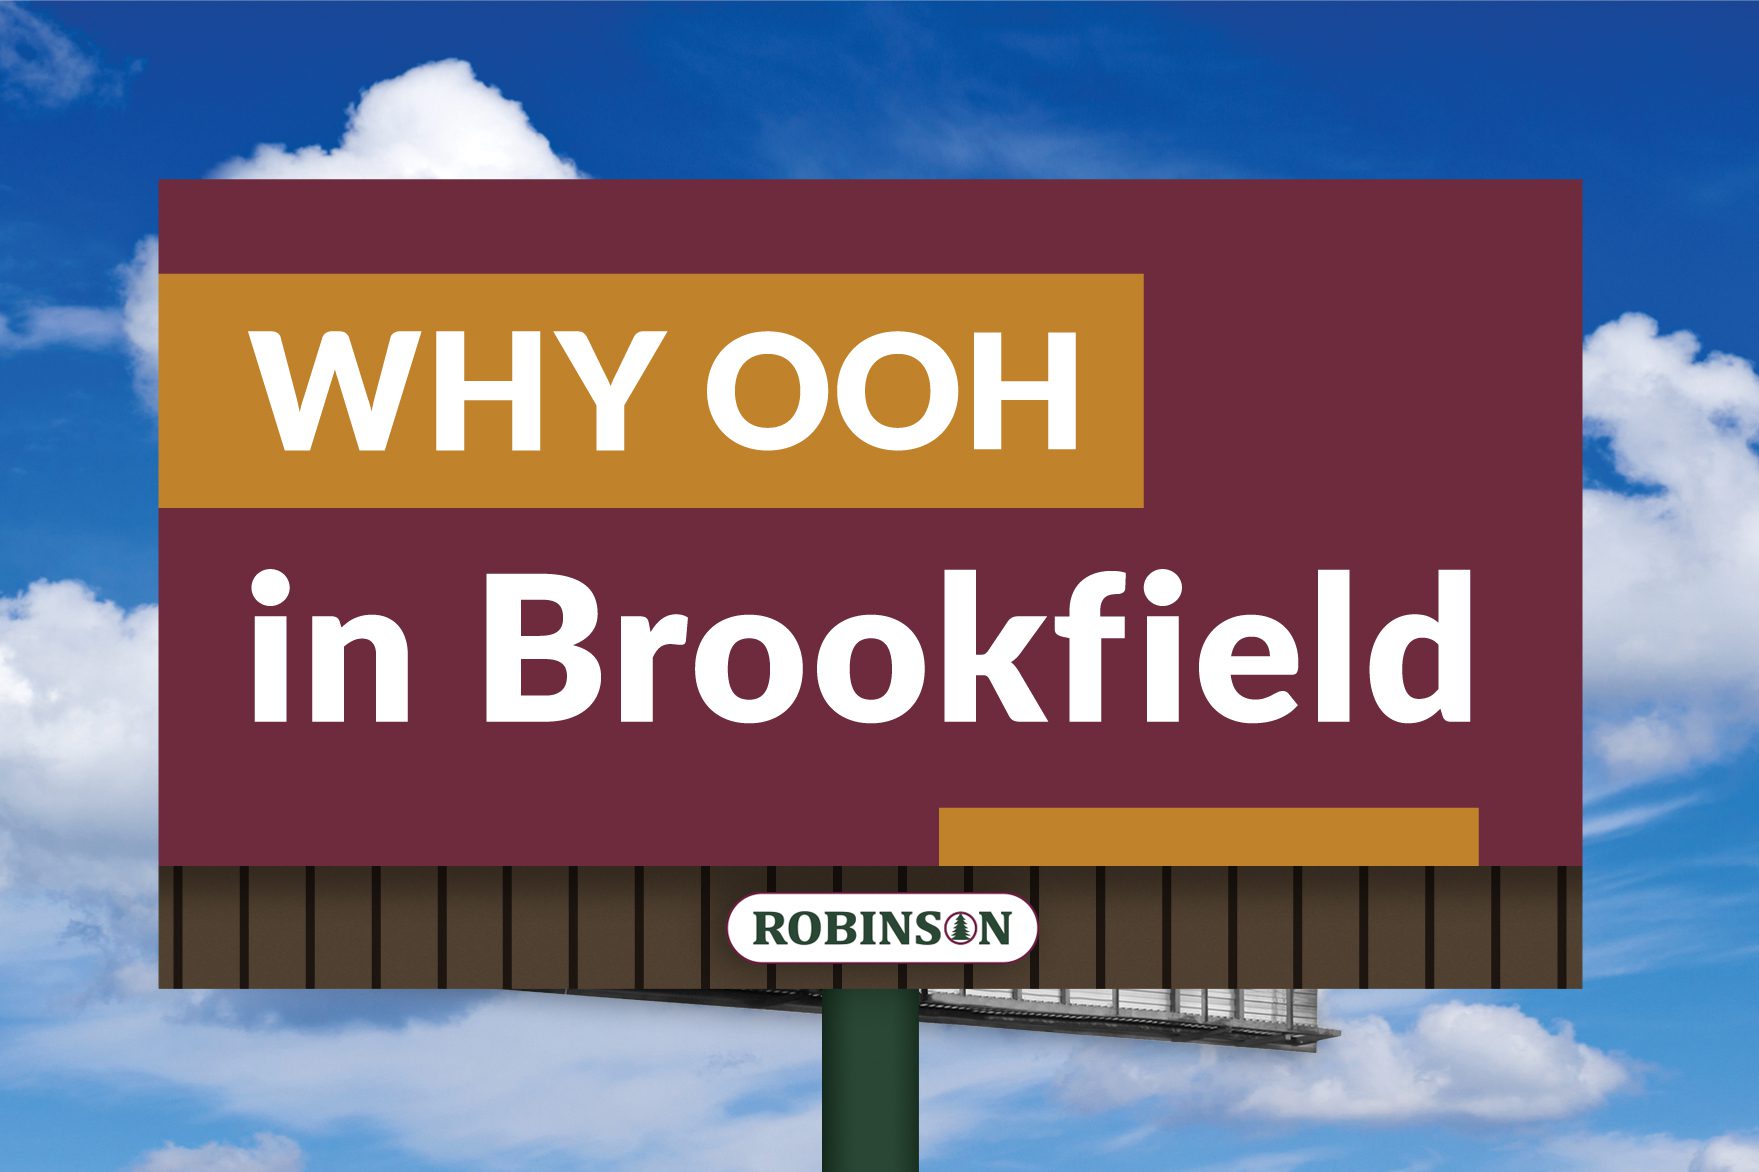 Brookfield, Missouri digital billboard advertising